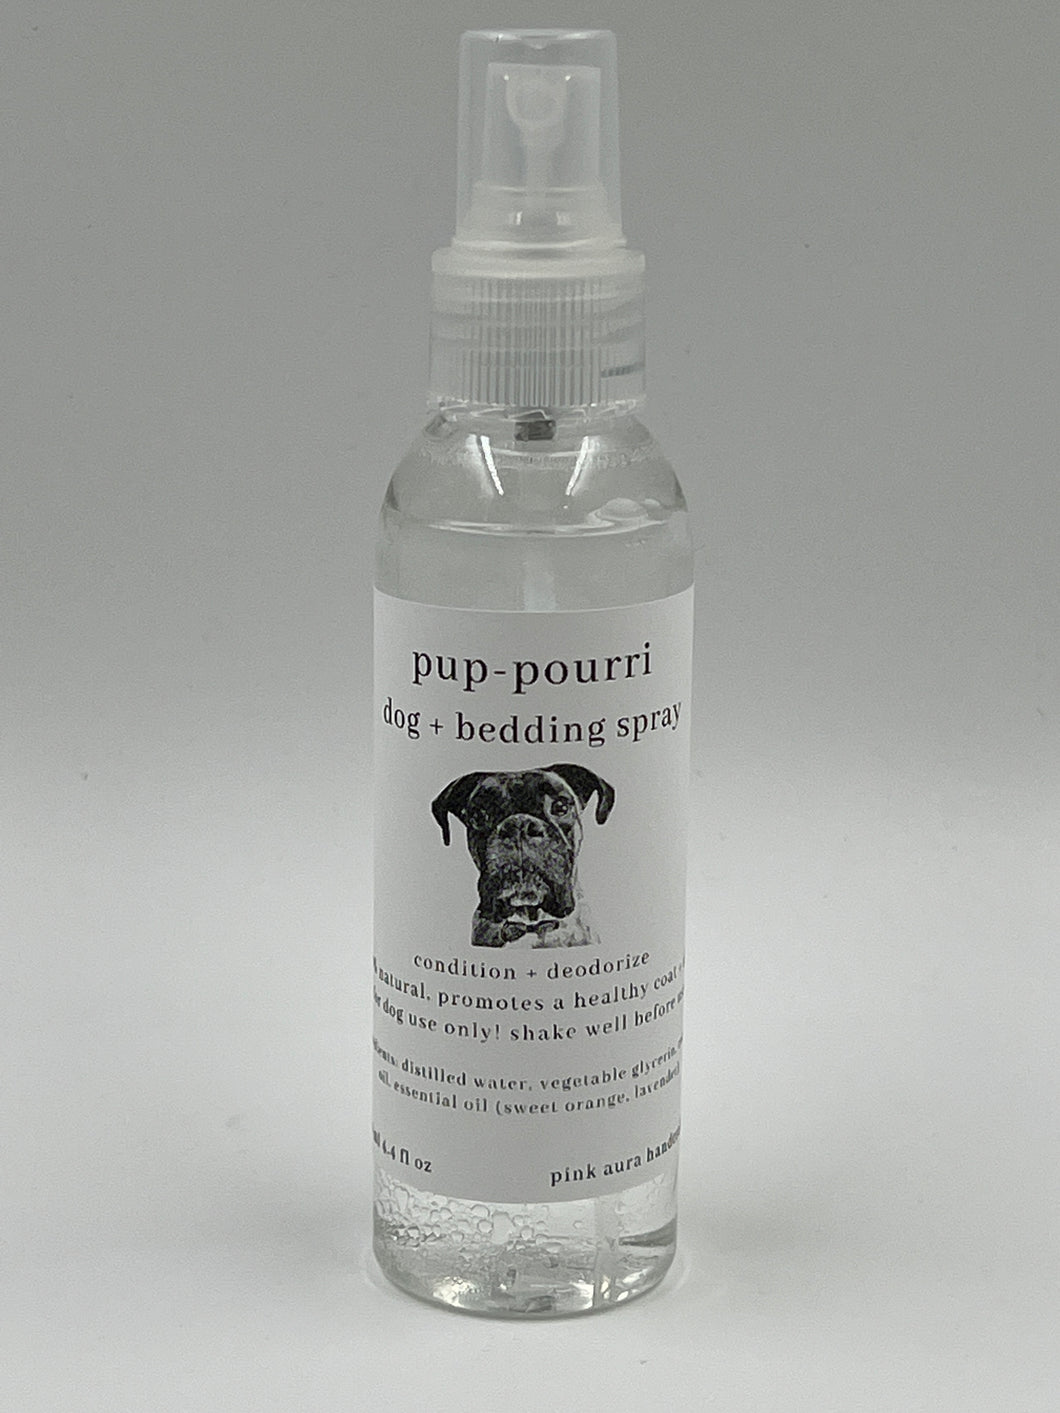 pup-pourri dog + bedding spray